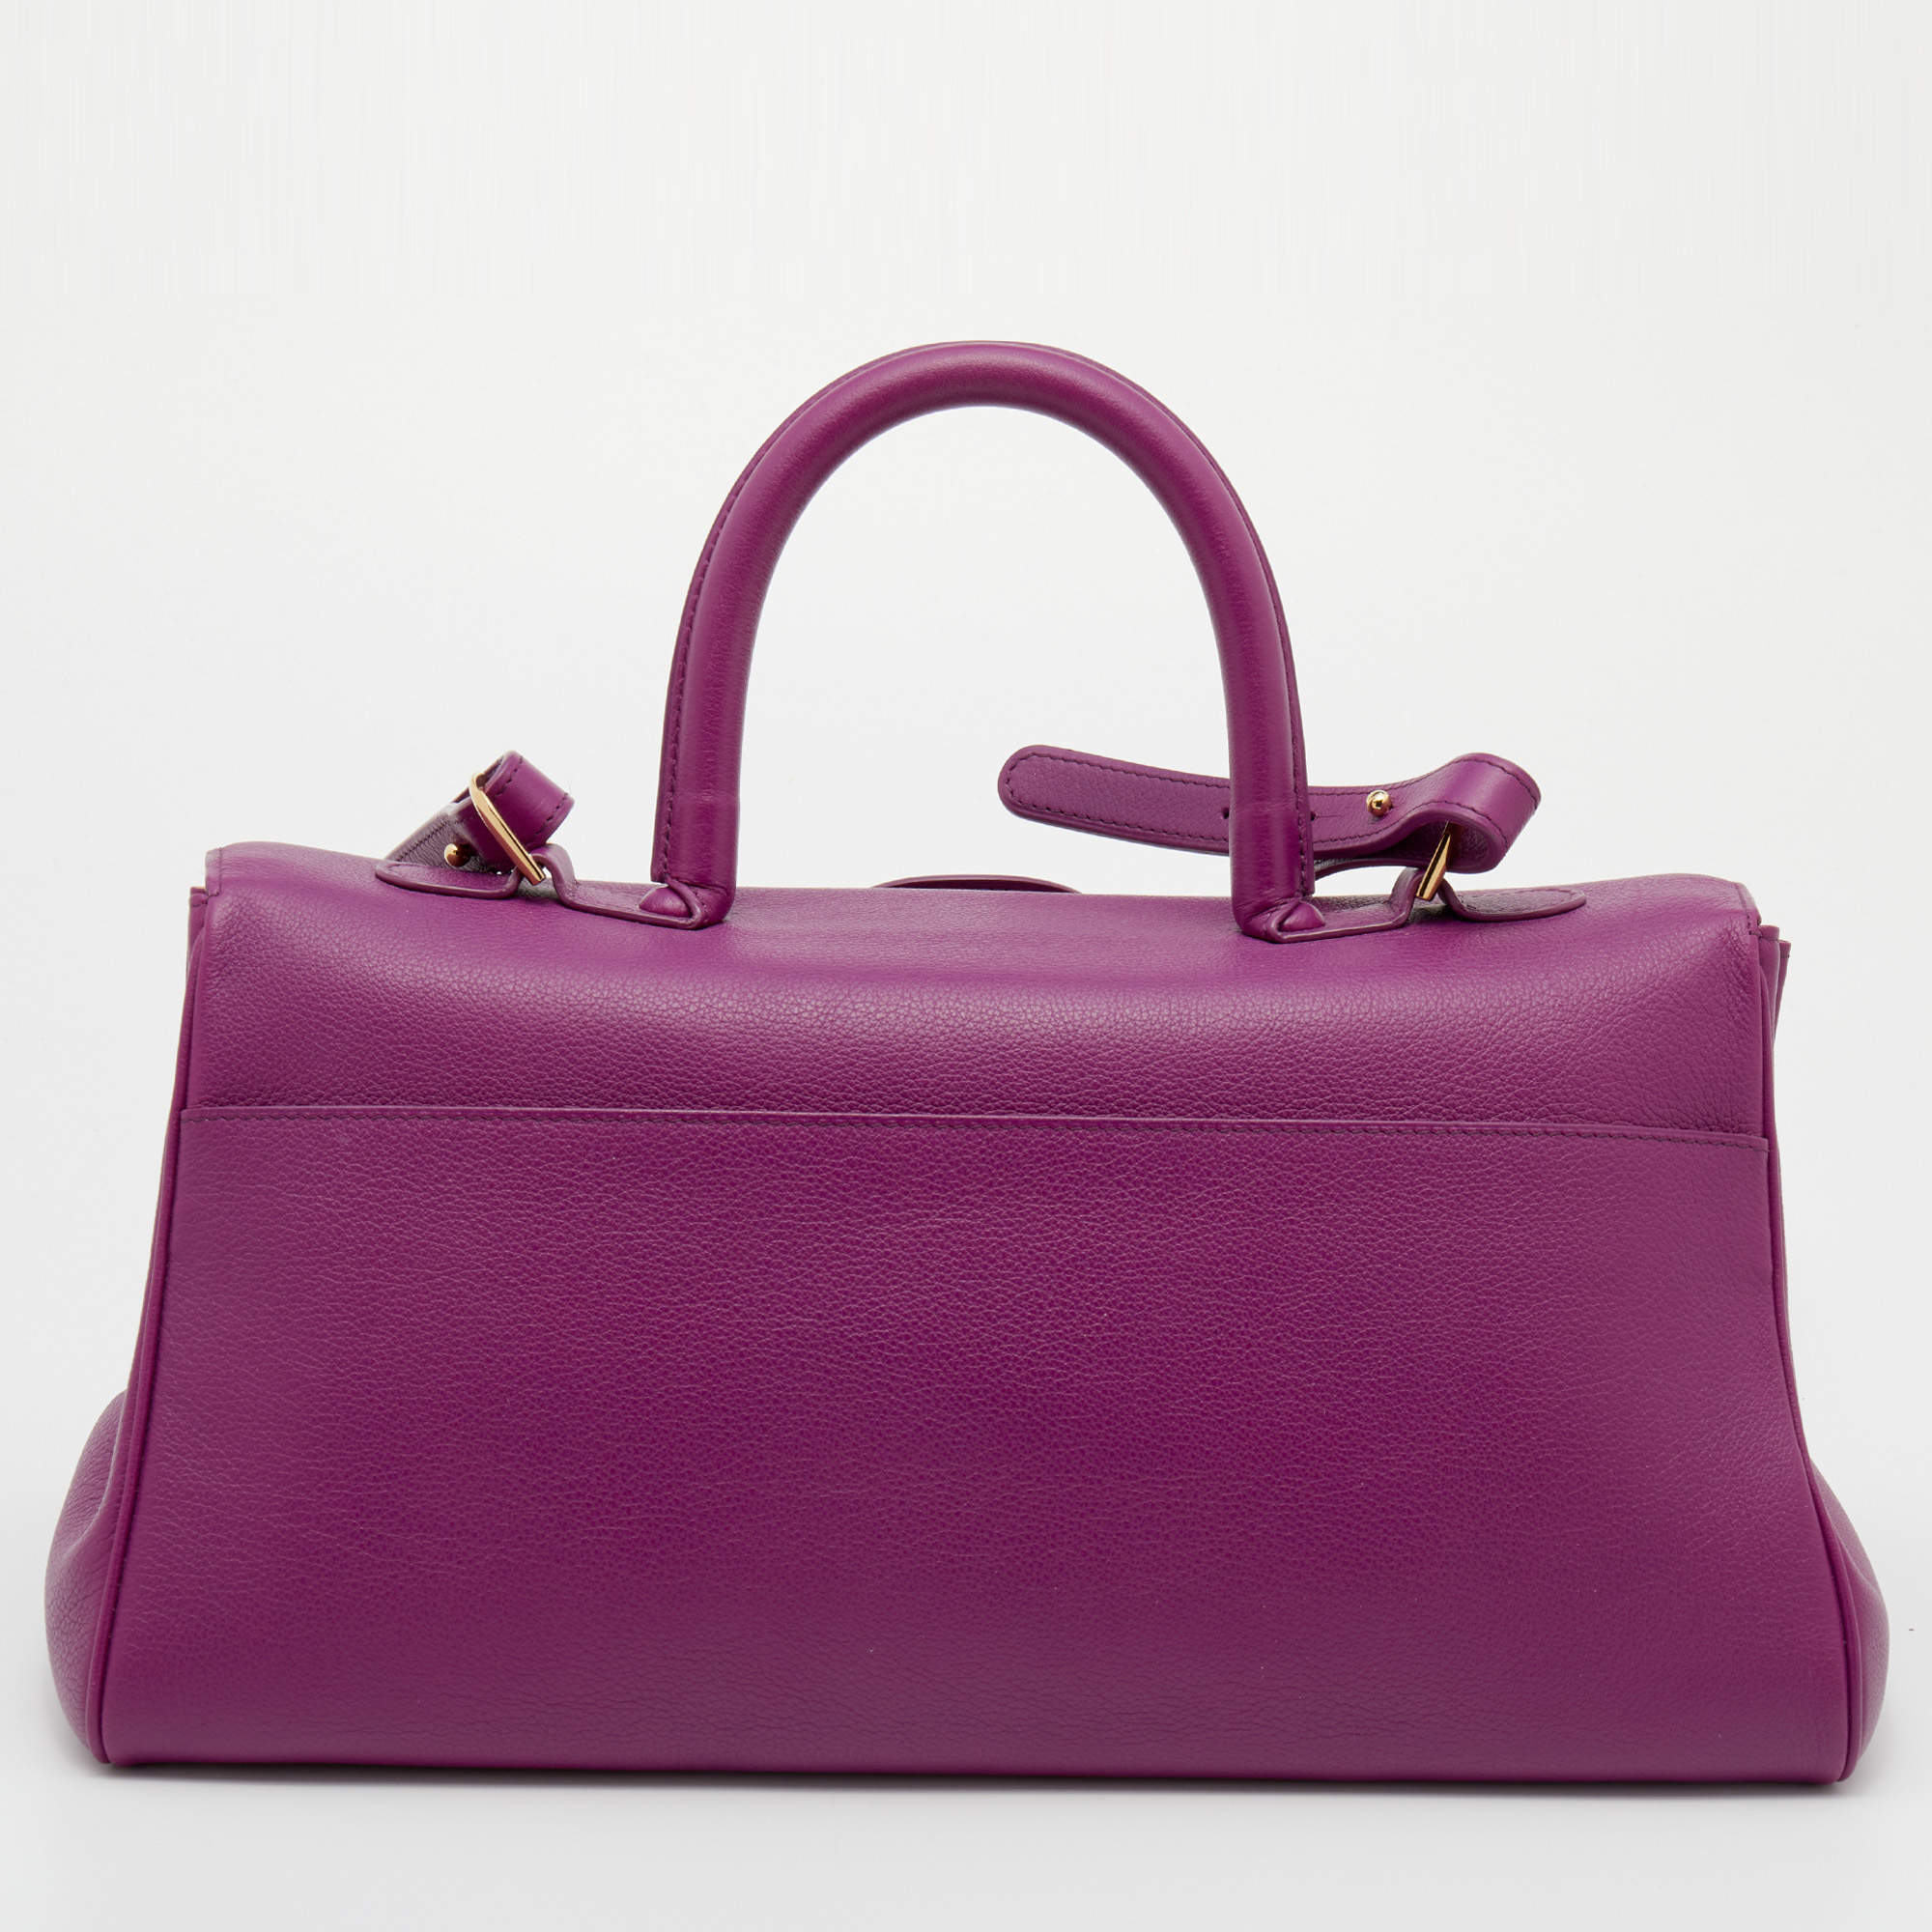 Brand New Delvaux Brilliant MM Leather Lilac Handbag W/box, dust cover 